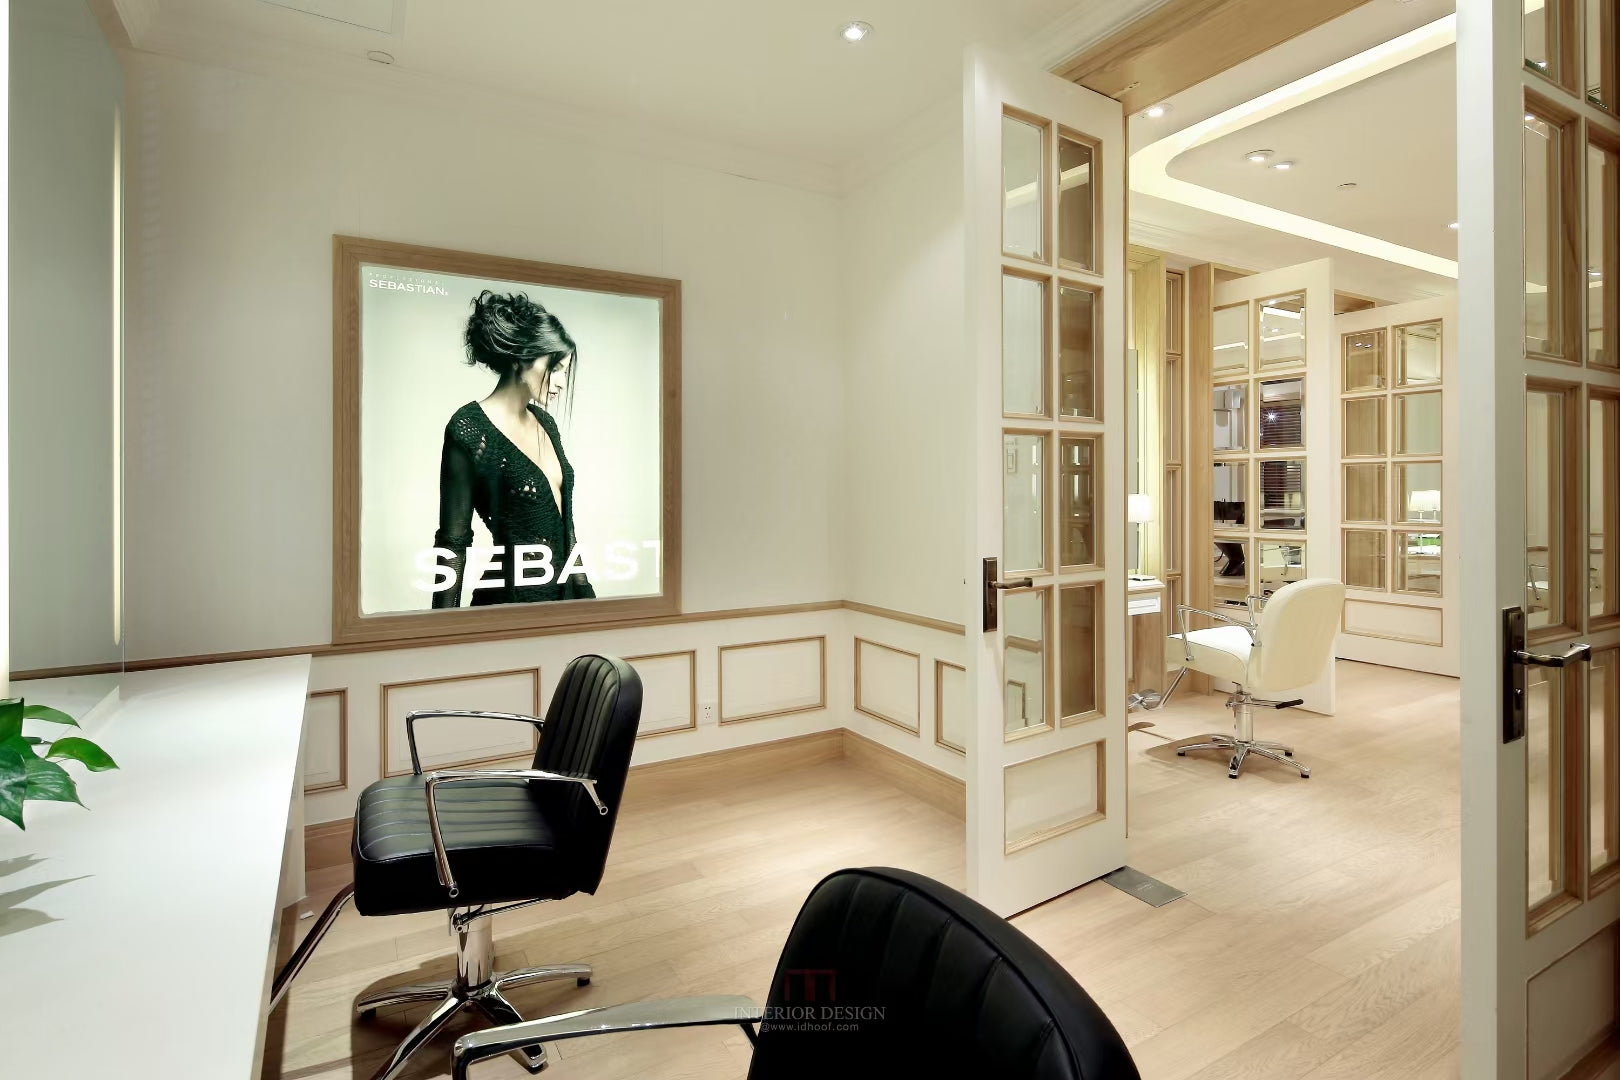 The Art of Beauty: Inspiring Salon Interior Design Concepts